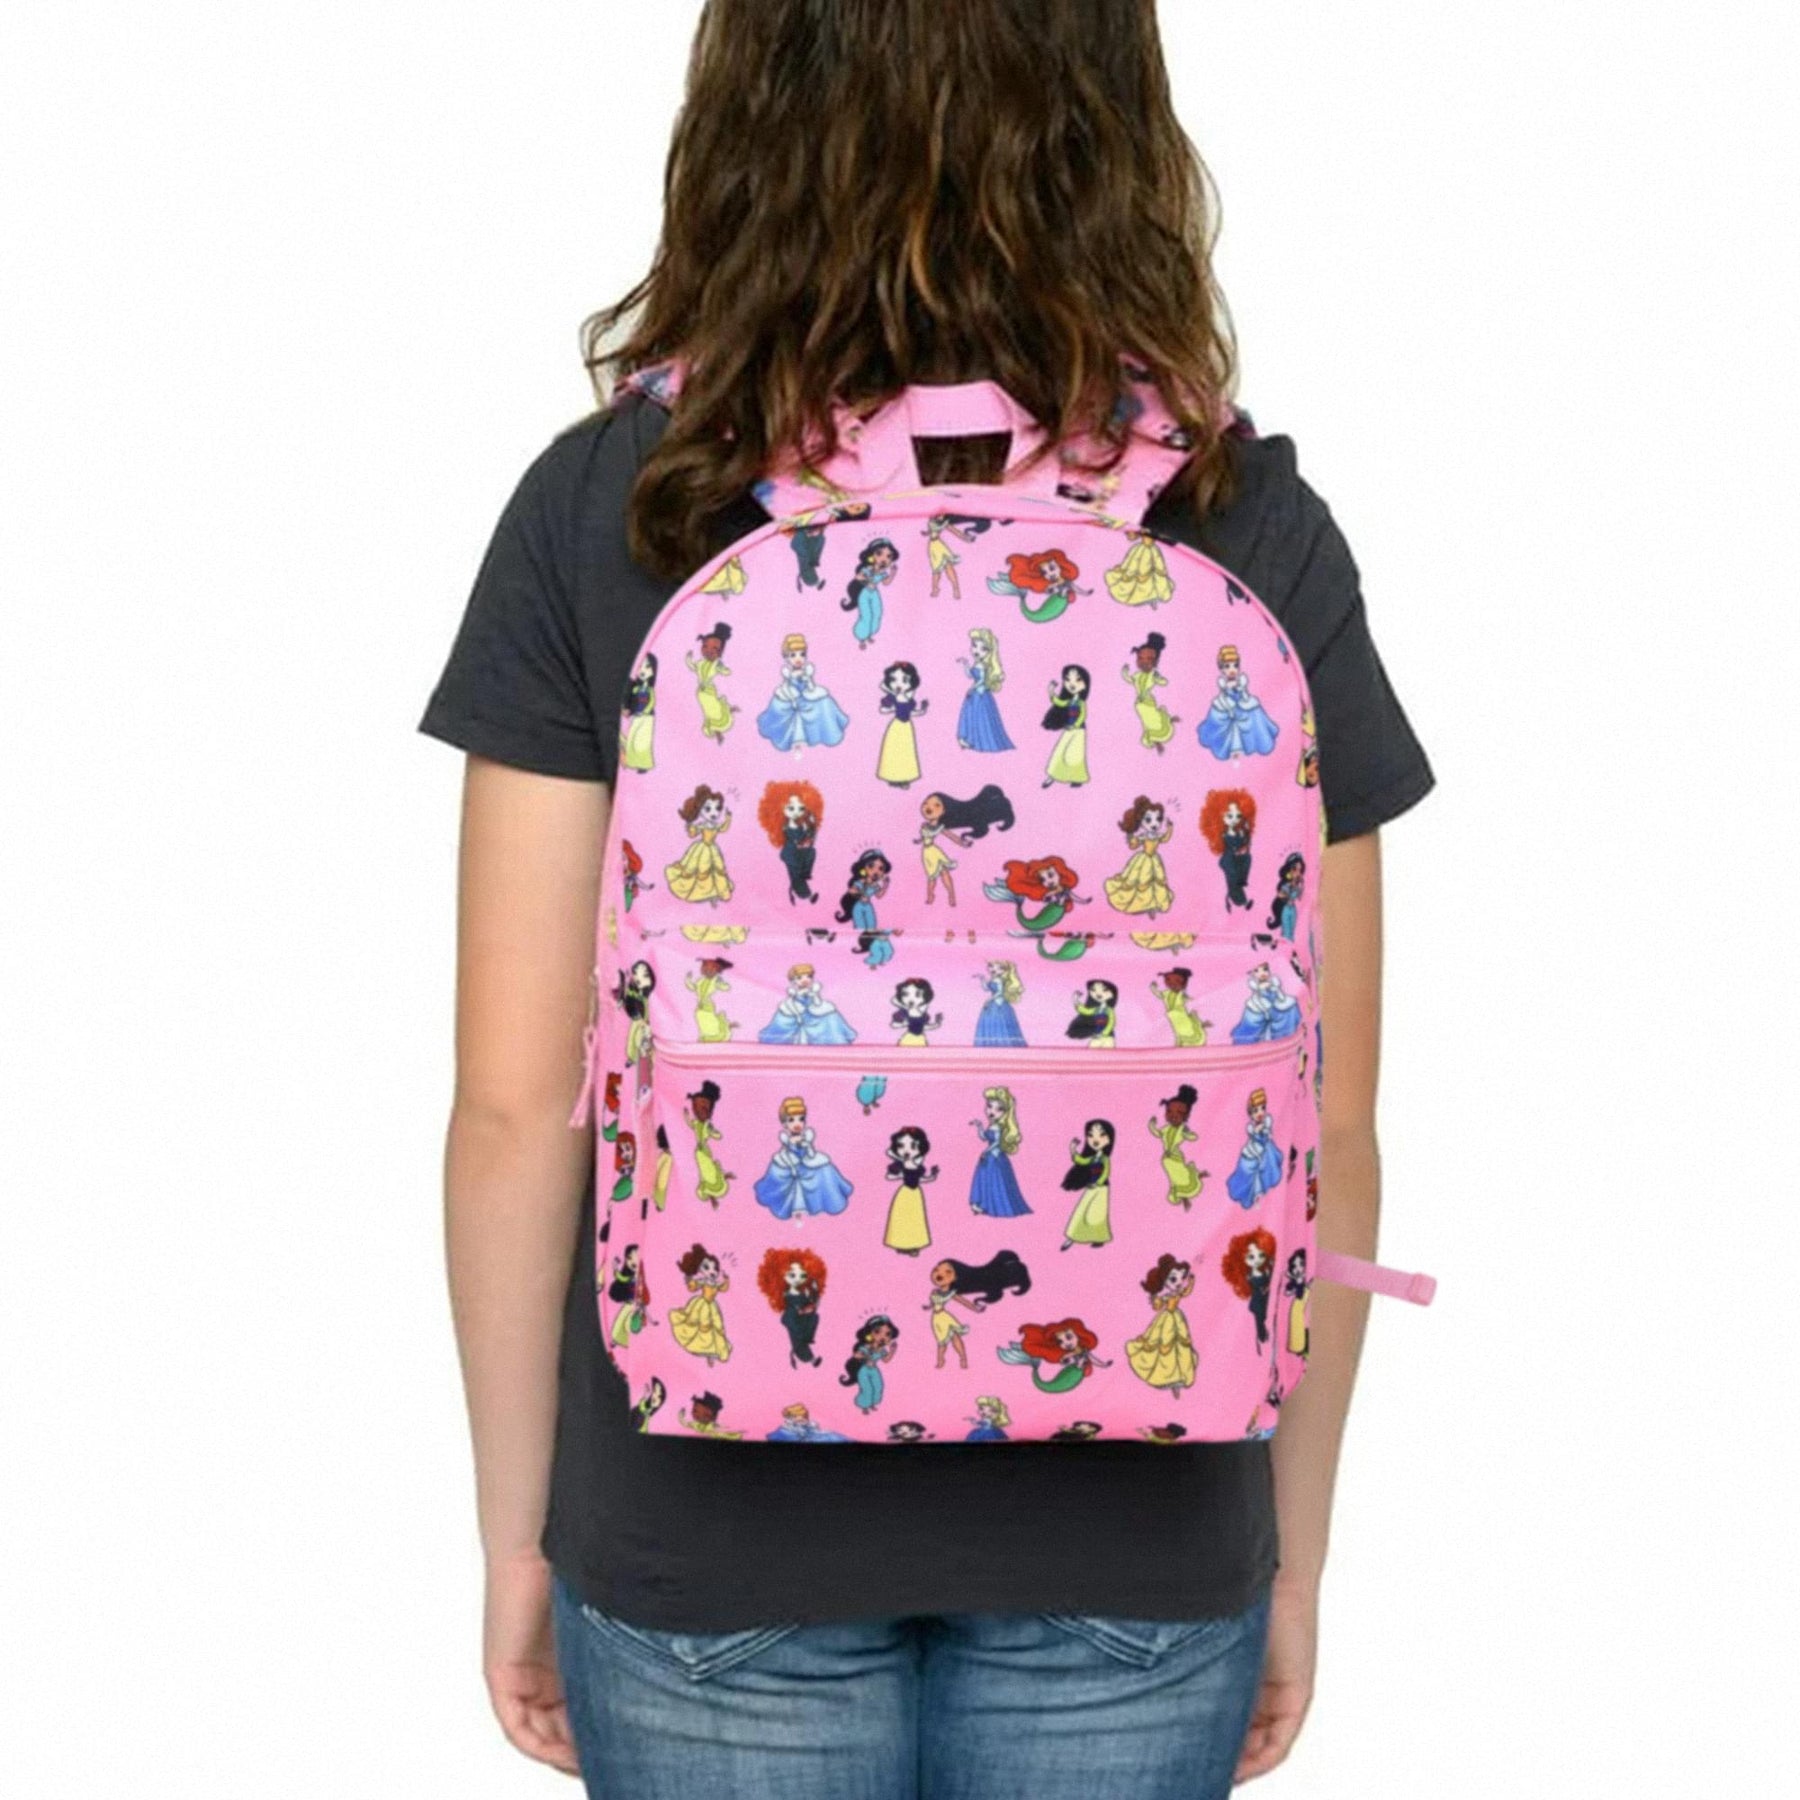 Disney Princess 16 Inch Pink Backpack